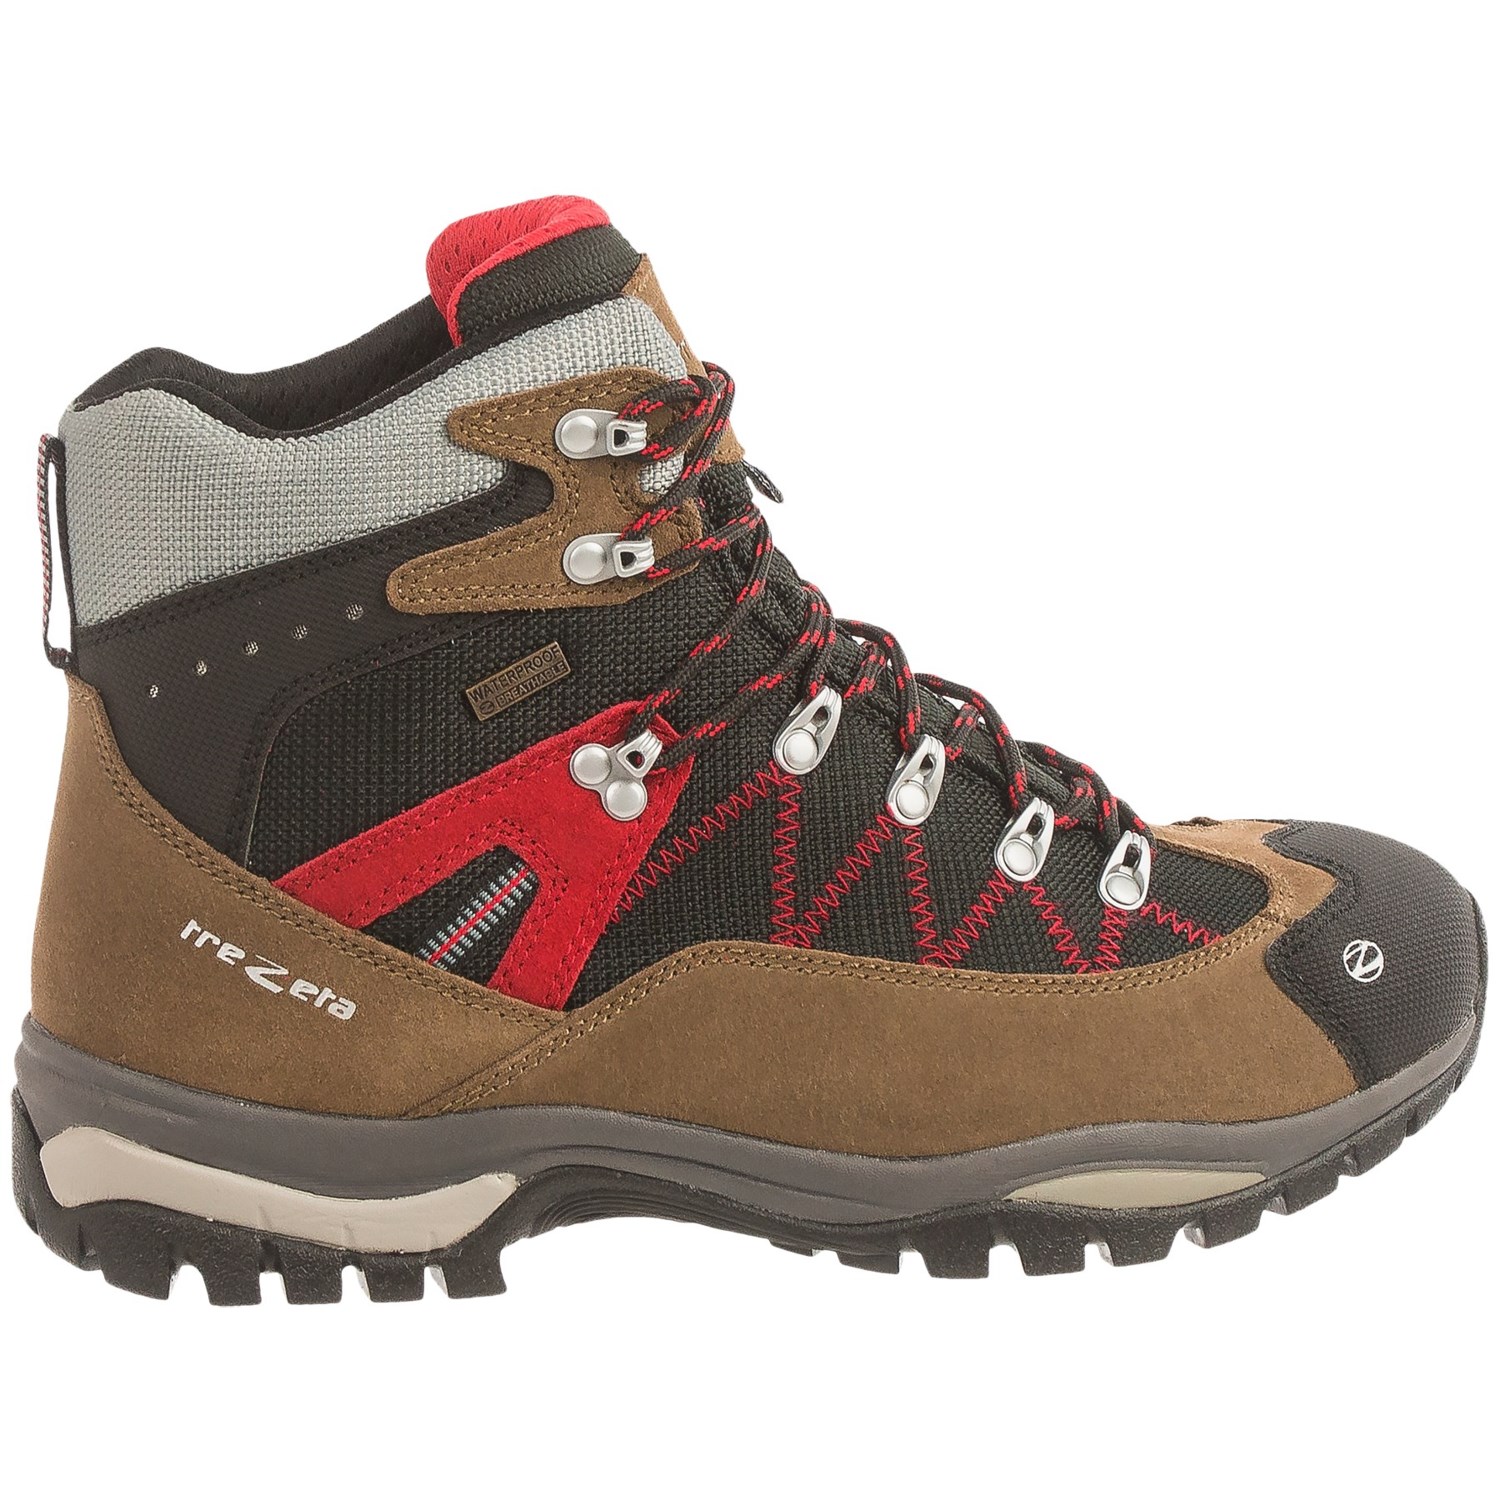 Trezeta Adventure Hiking Boots (For Men) - Save 46%